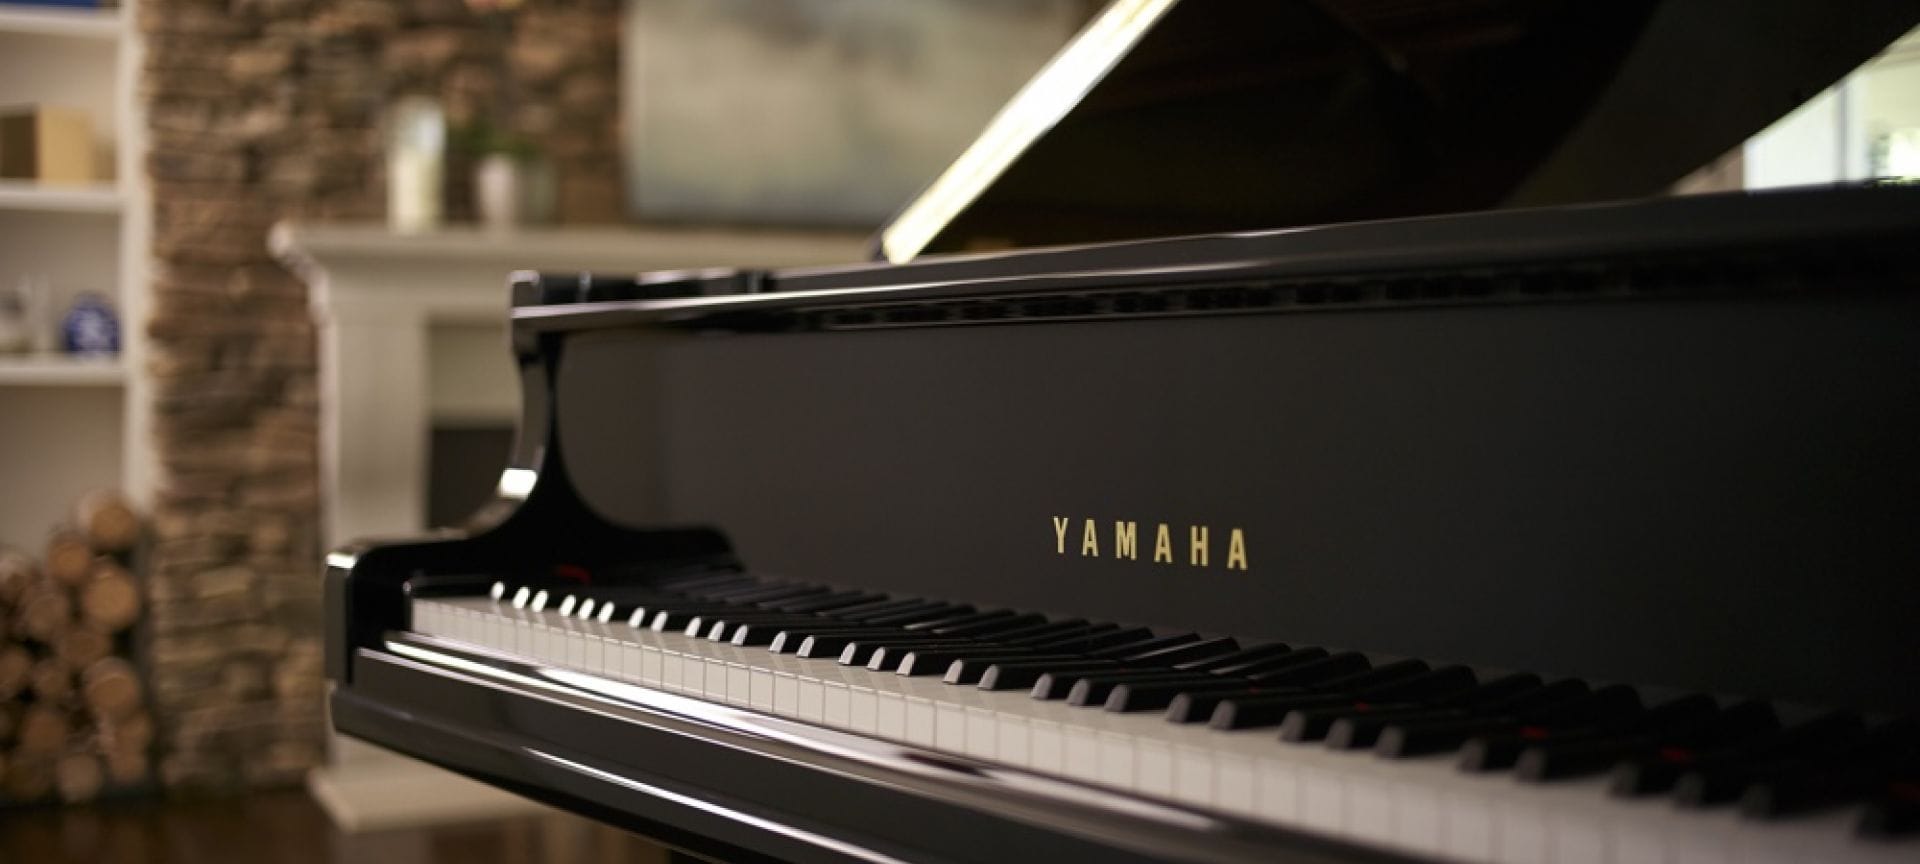 2خرید پیانو آکوستیک رویال یاماها GB1